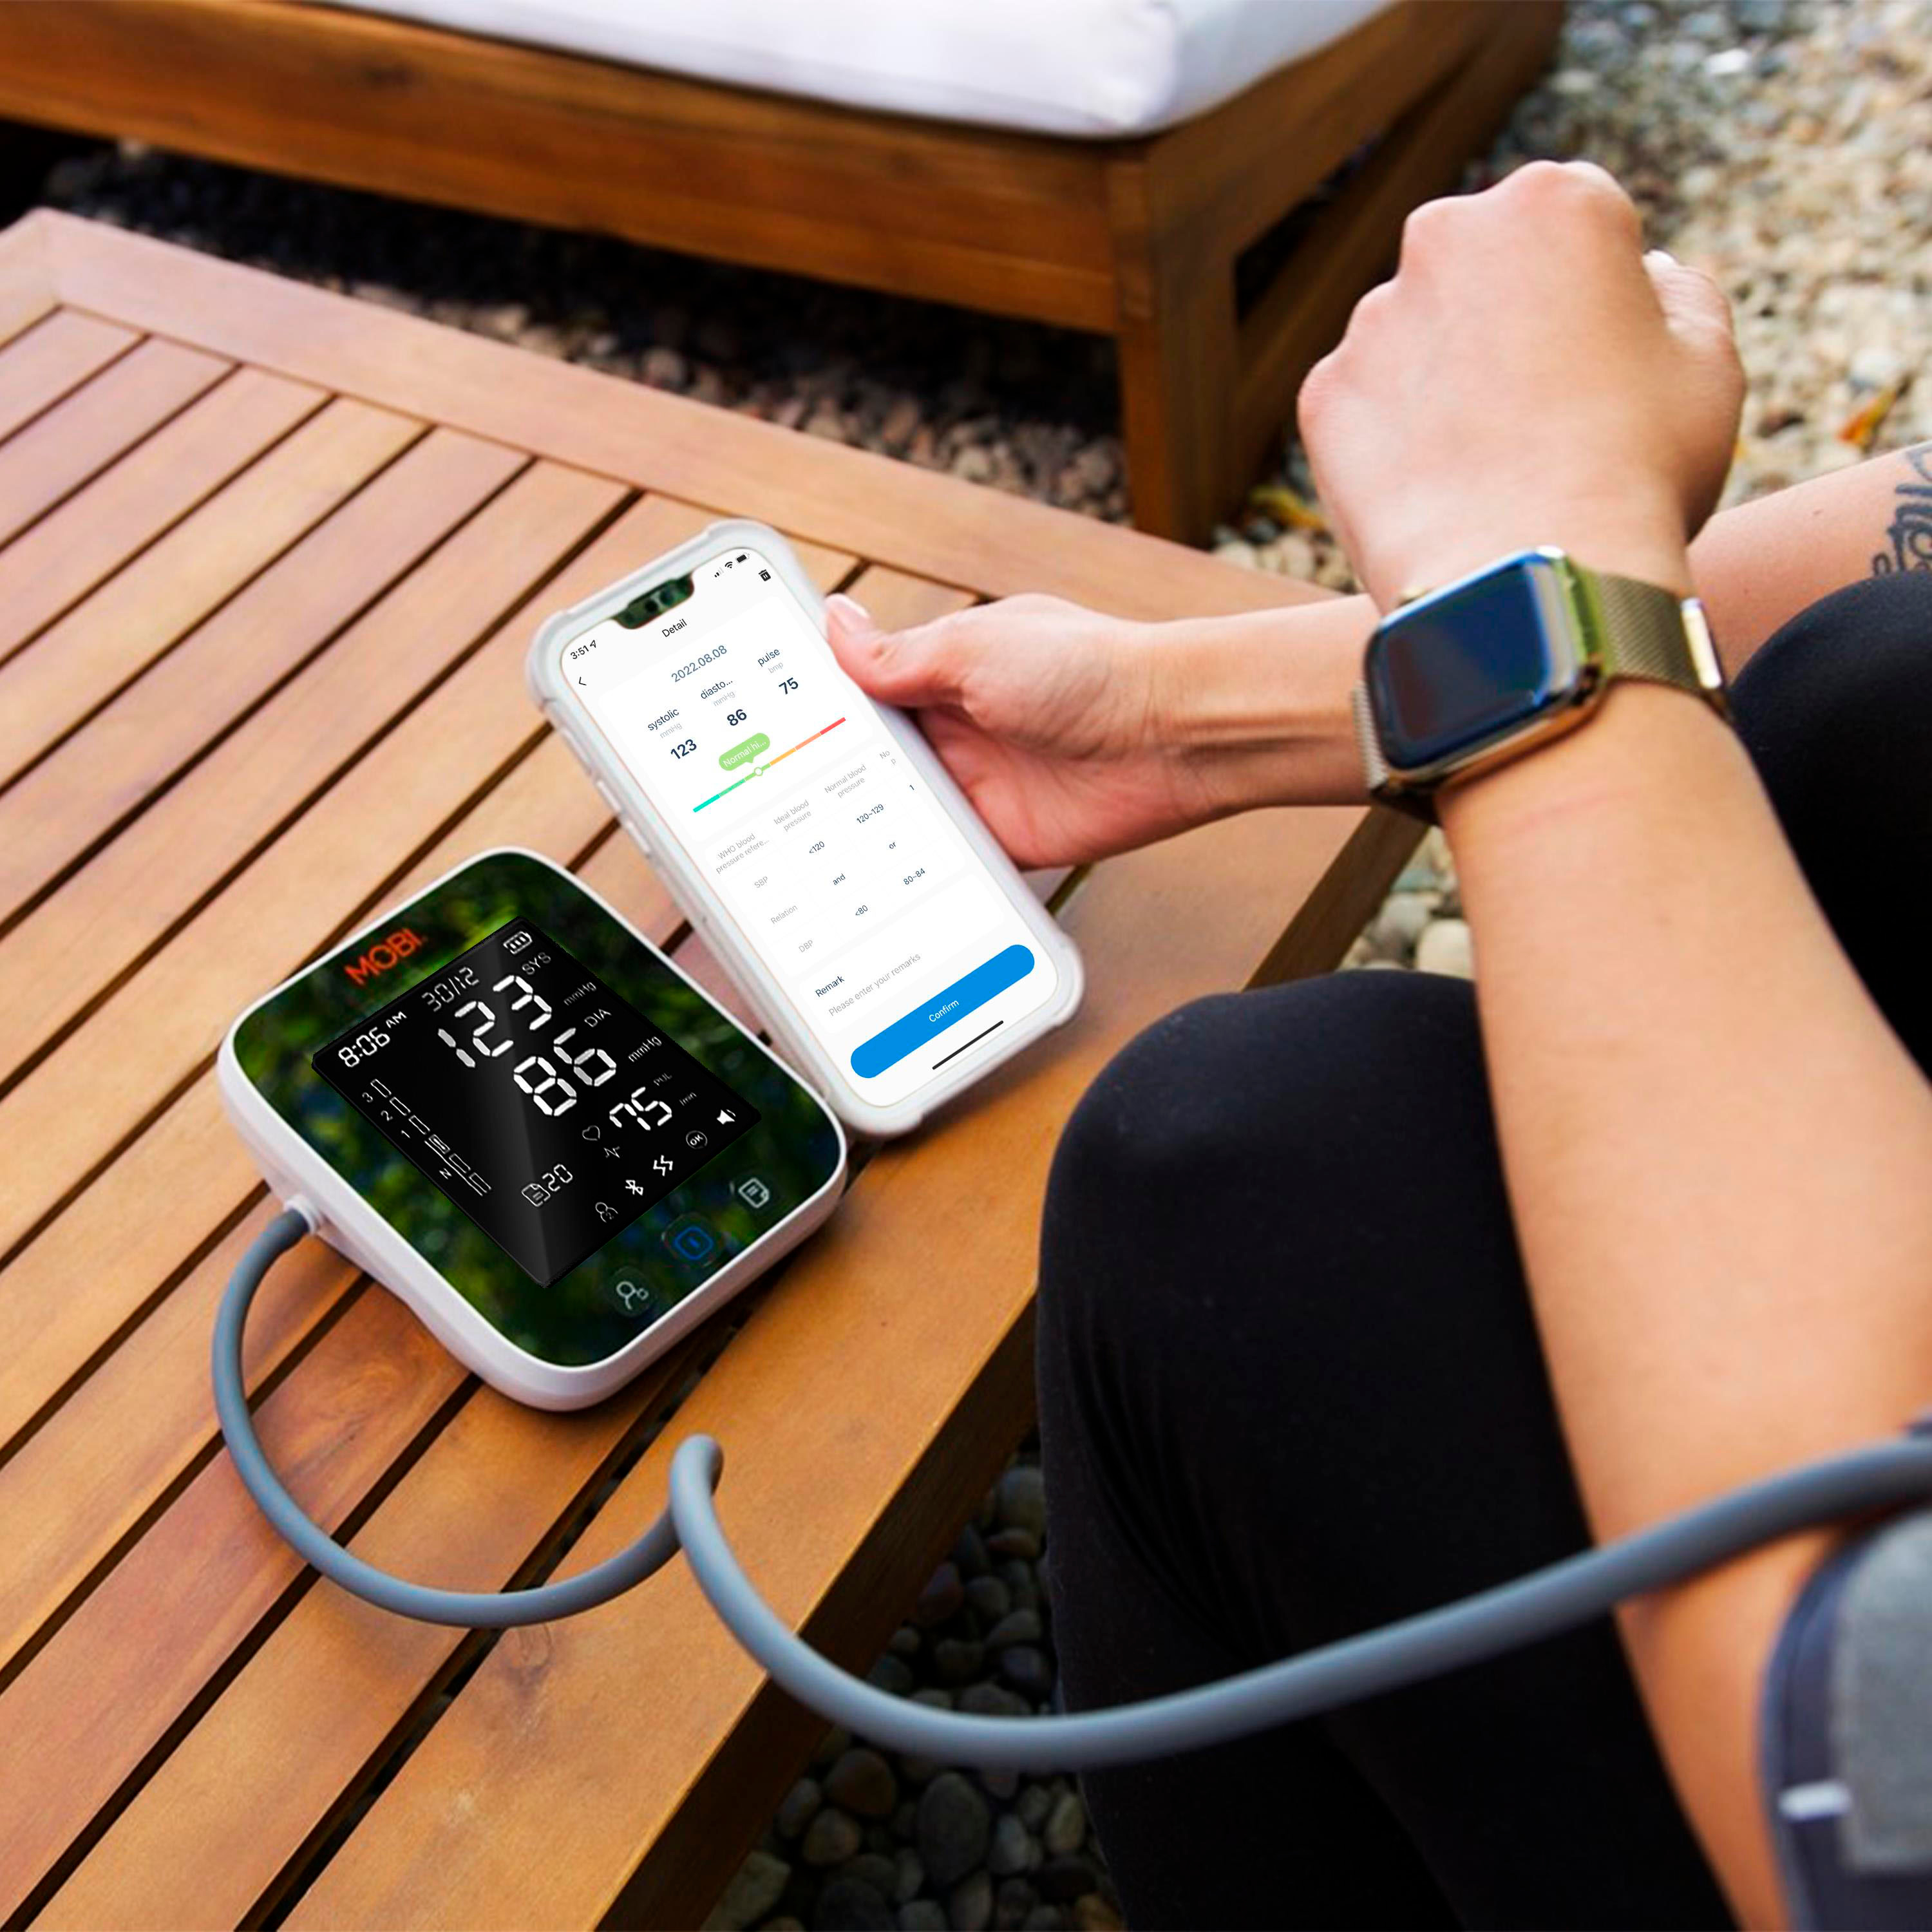 Automatic Wrist Blood Pressure Monitor: Easy@Home Bluetooth Smart Large  Cuff BP Machine | Digital Sphygmomanometer| Heart Positioning Indicator |  iOS